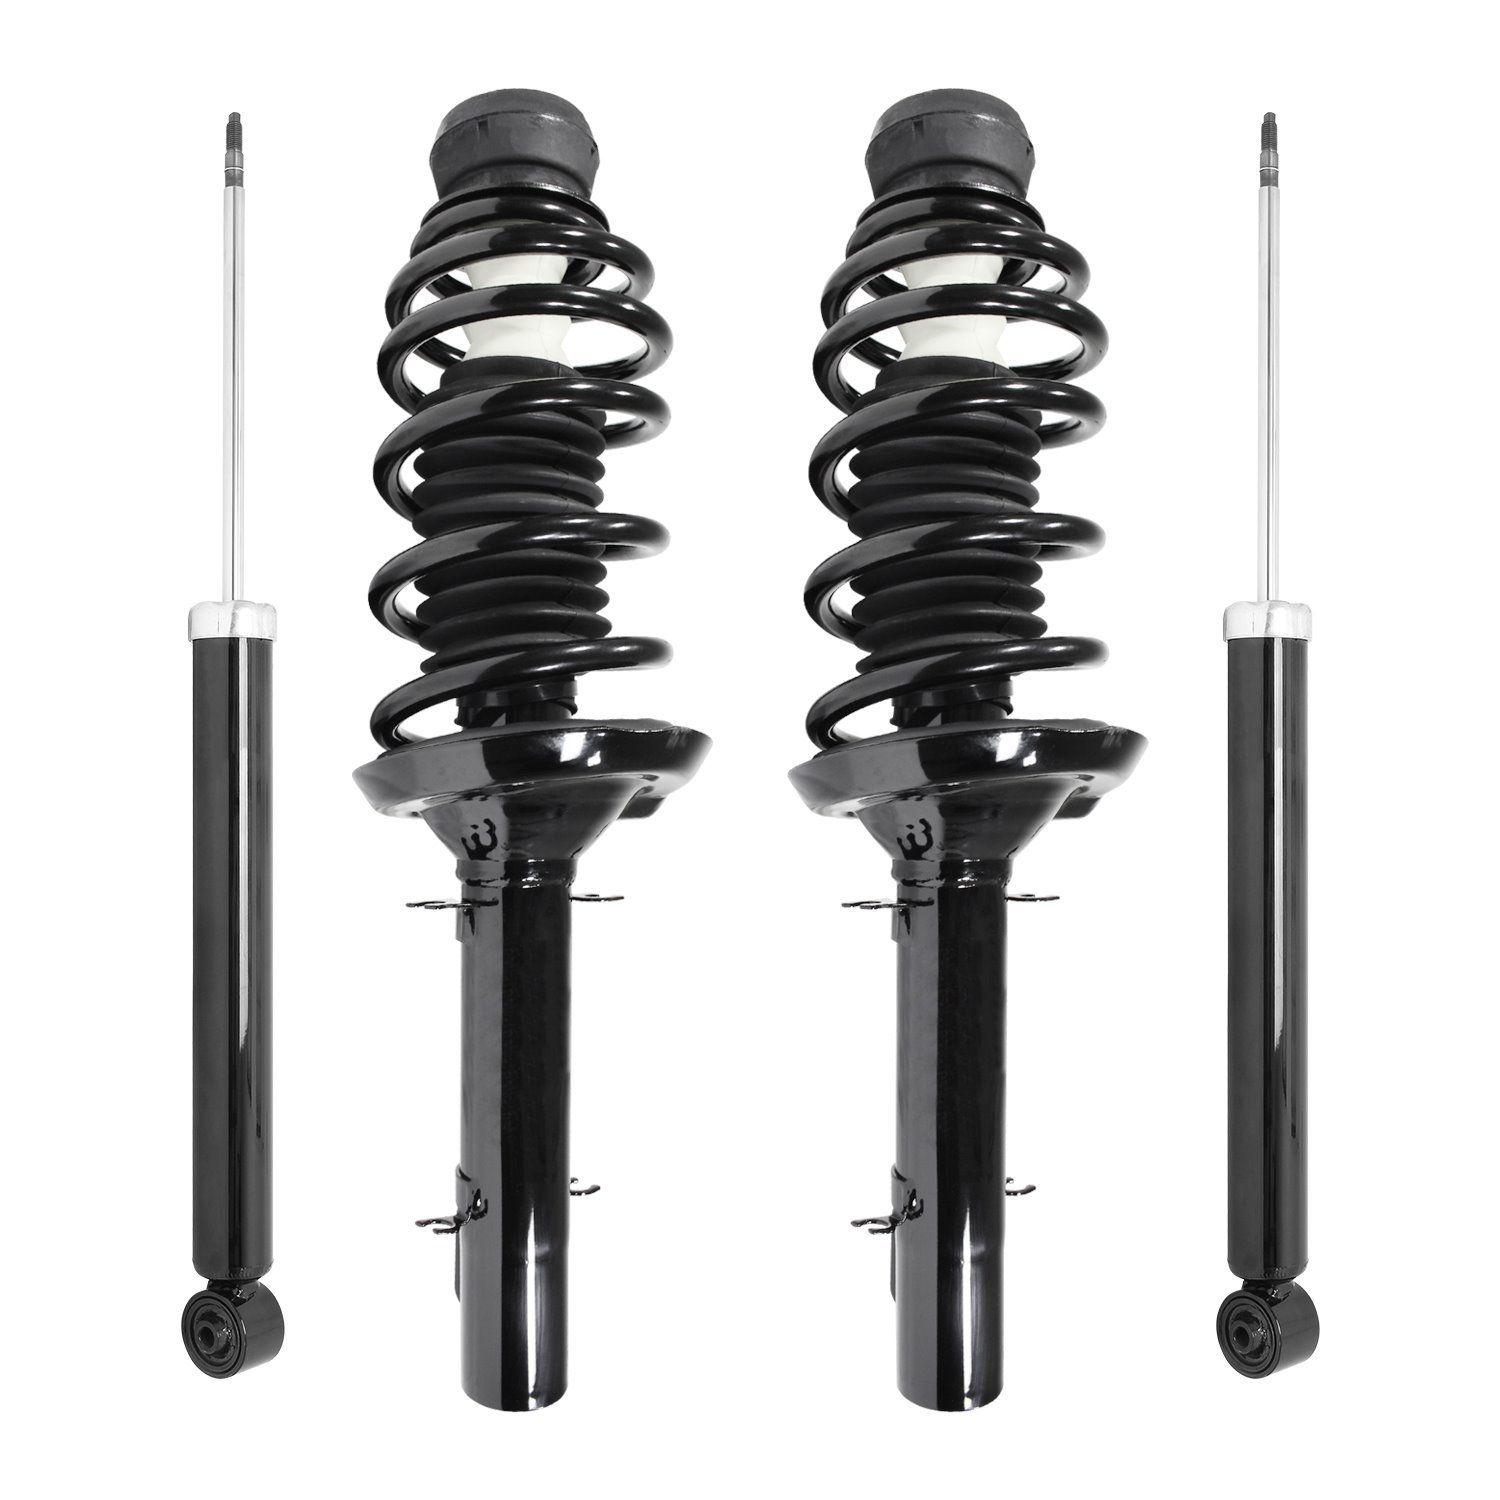 4-11100-257010-001 Front & Rear Suspension Strut & Coil Spring Assembly Fits Select Volkswagen